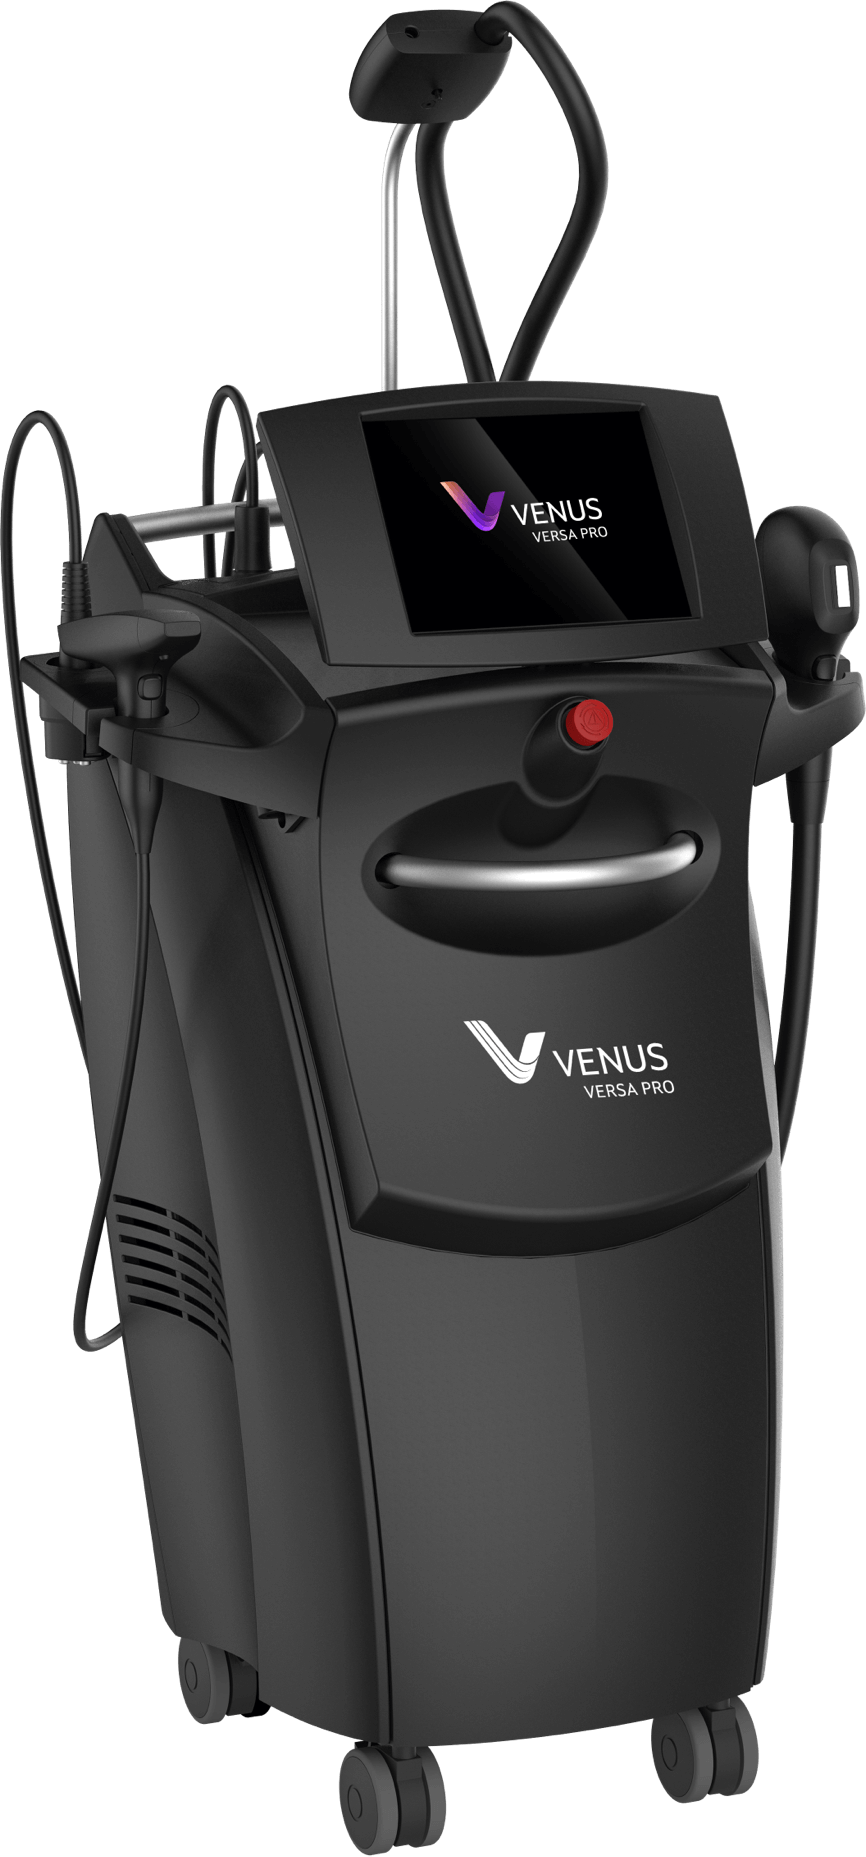 Venus Versa Related Product